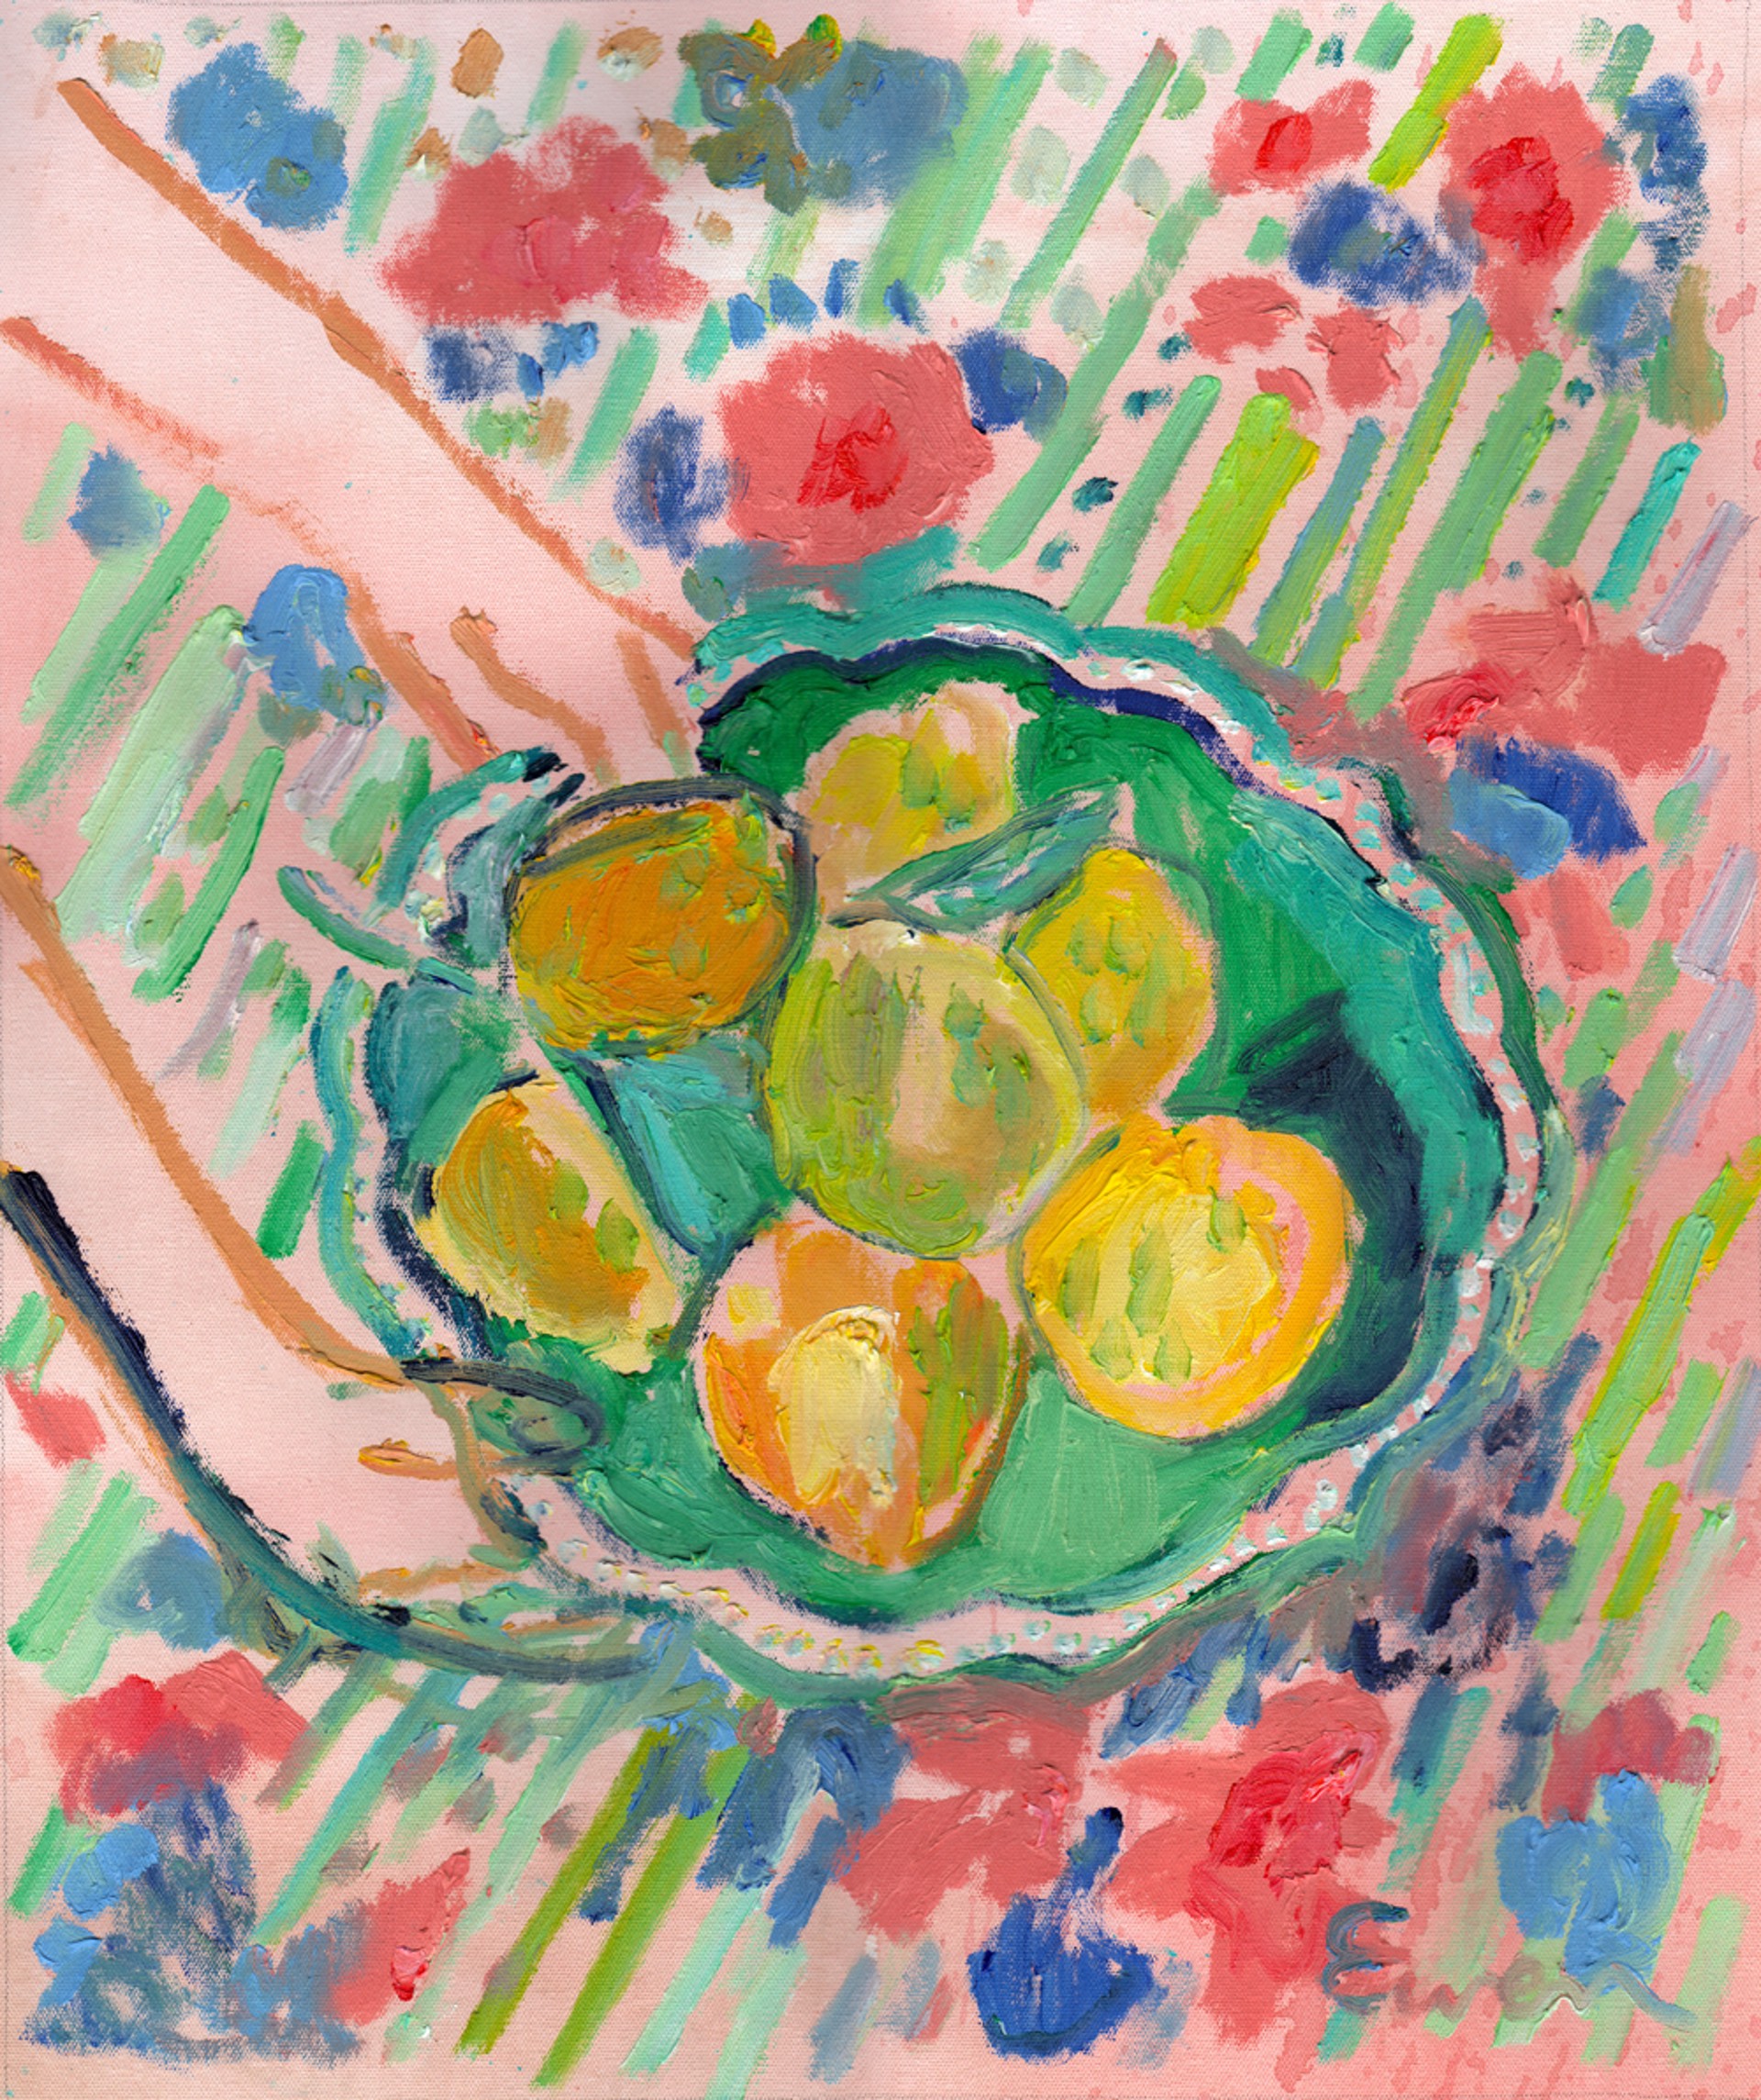 Bowl of Lemons 2 by Anne-Louise Ewen